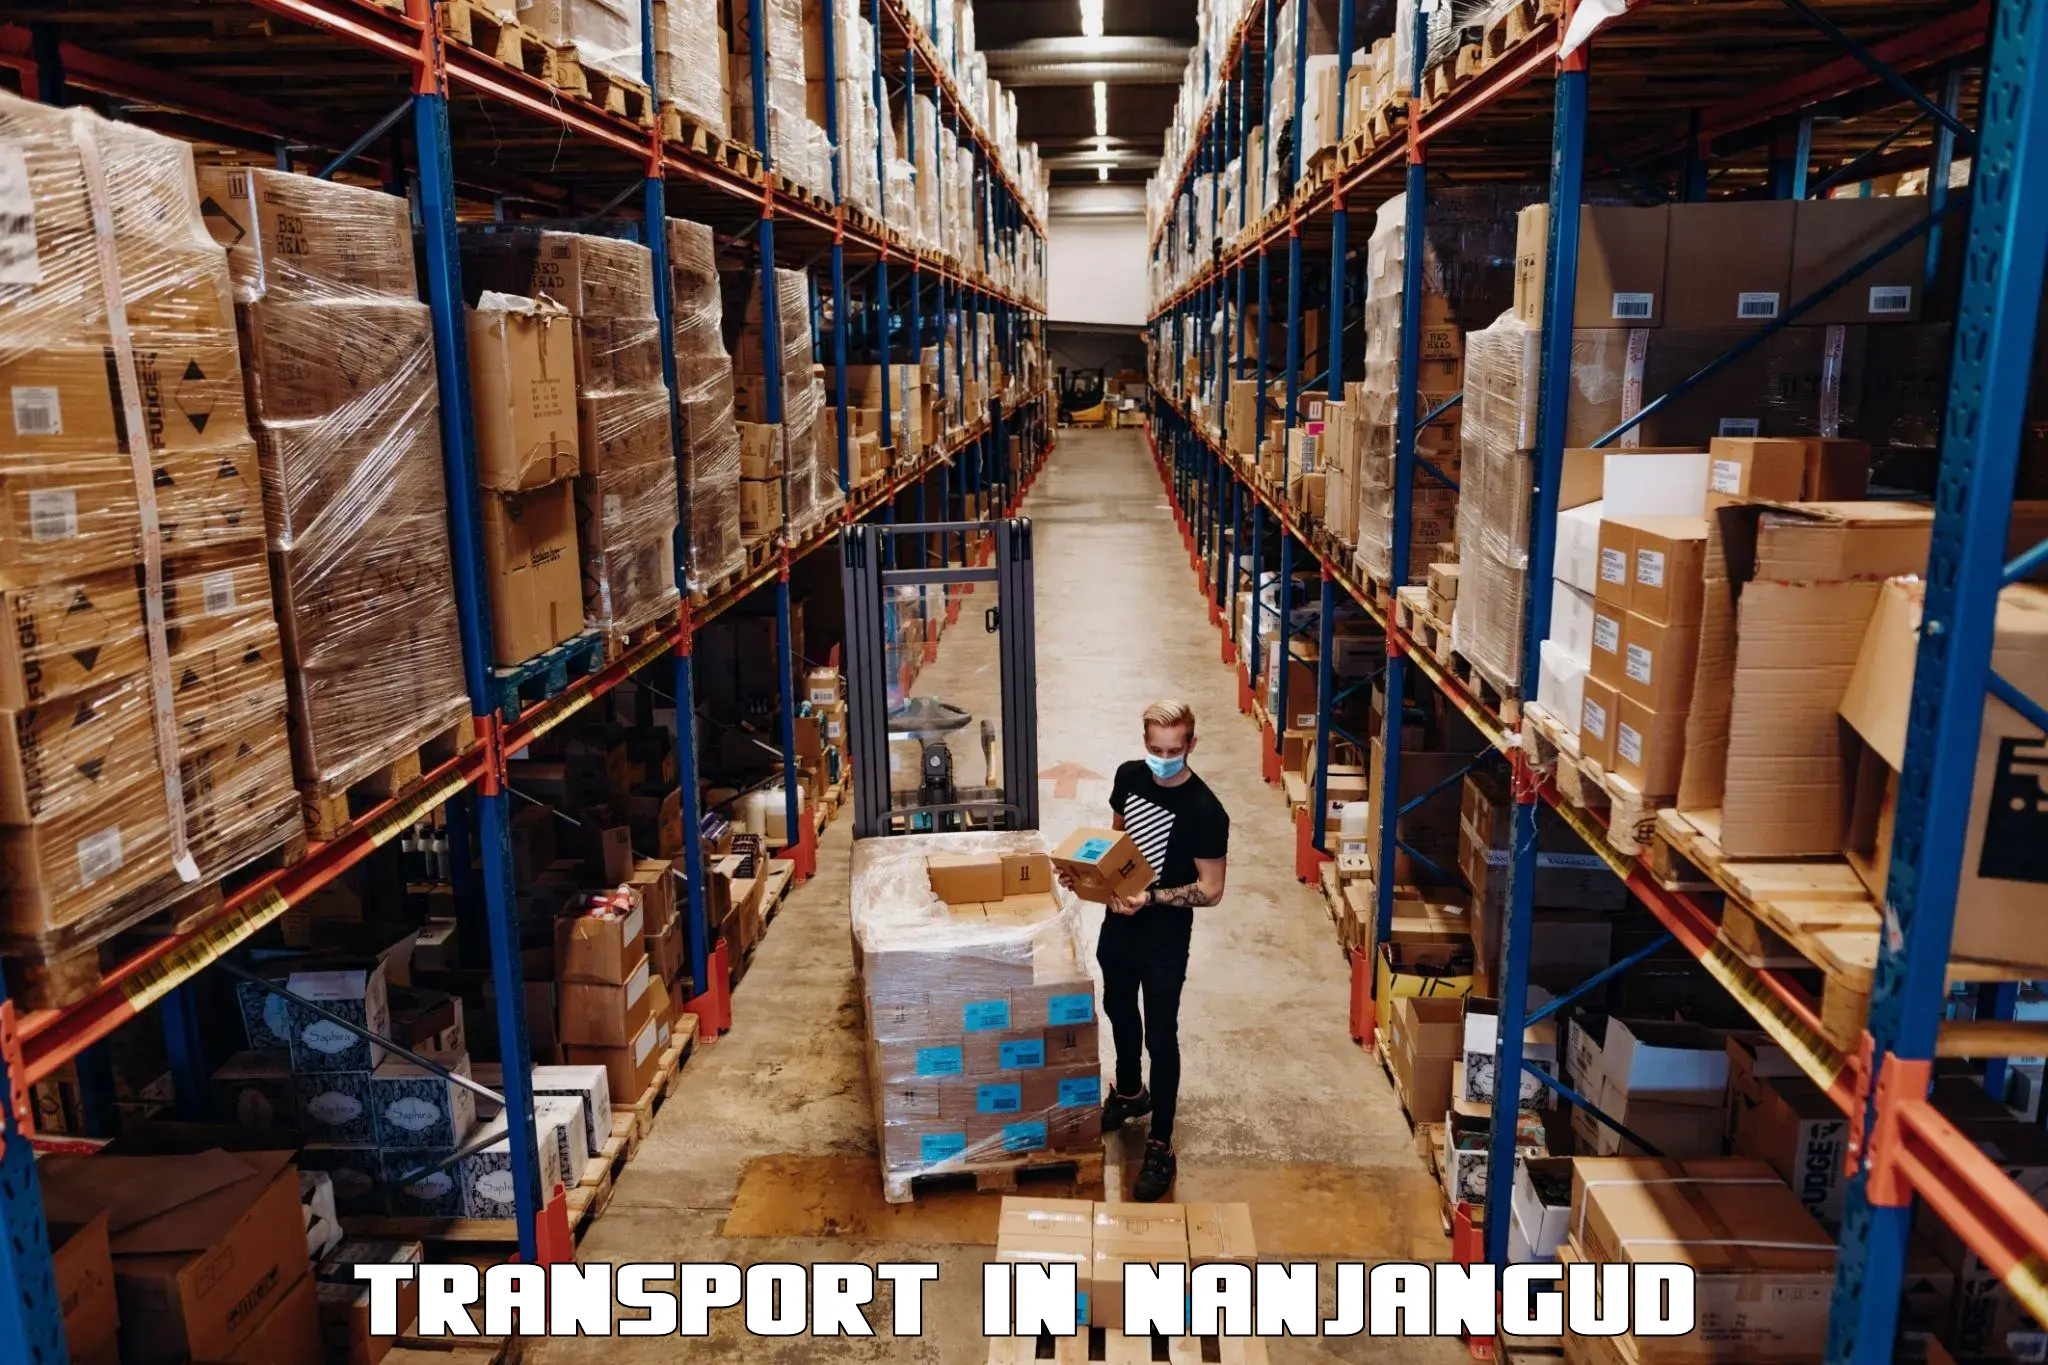 Transport in sharing in Nanjangud